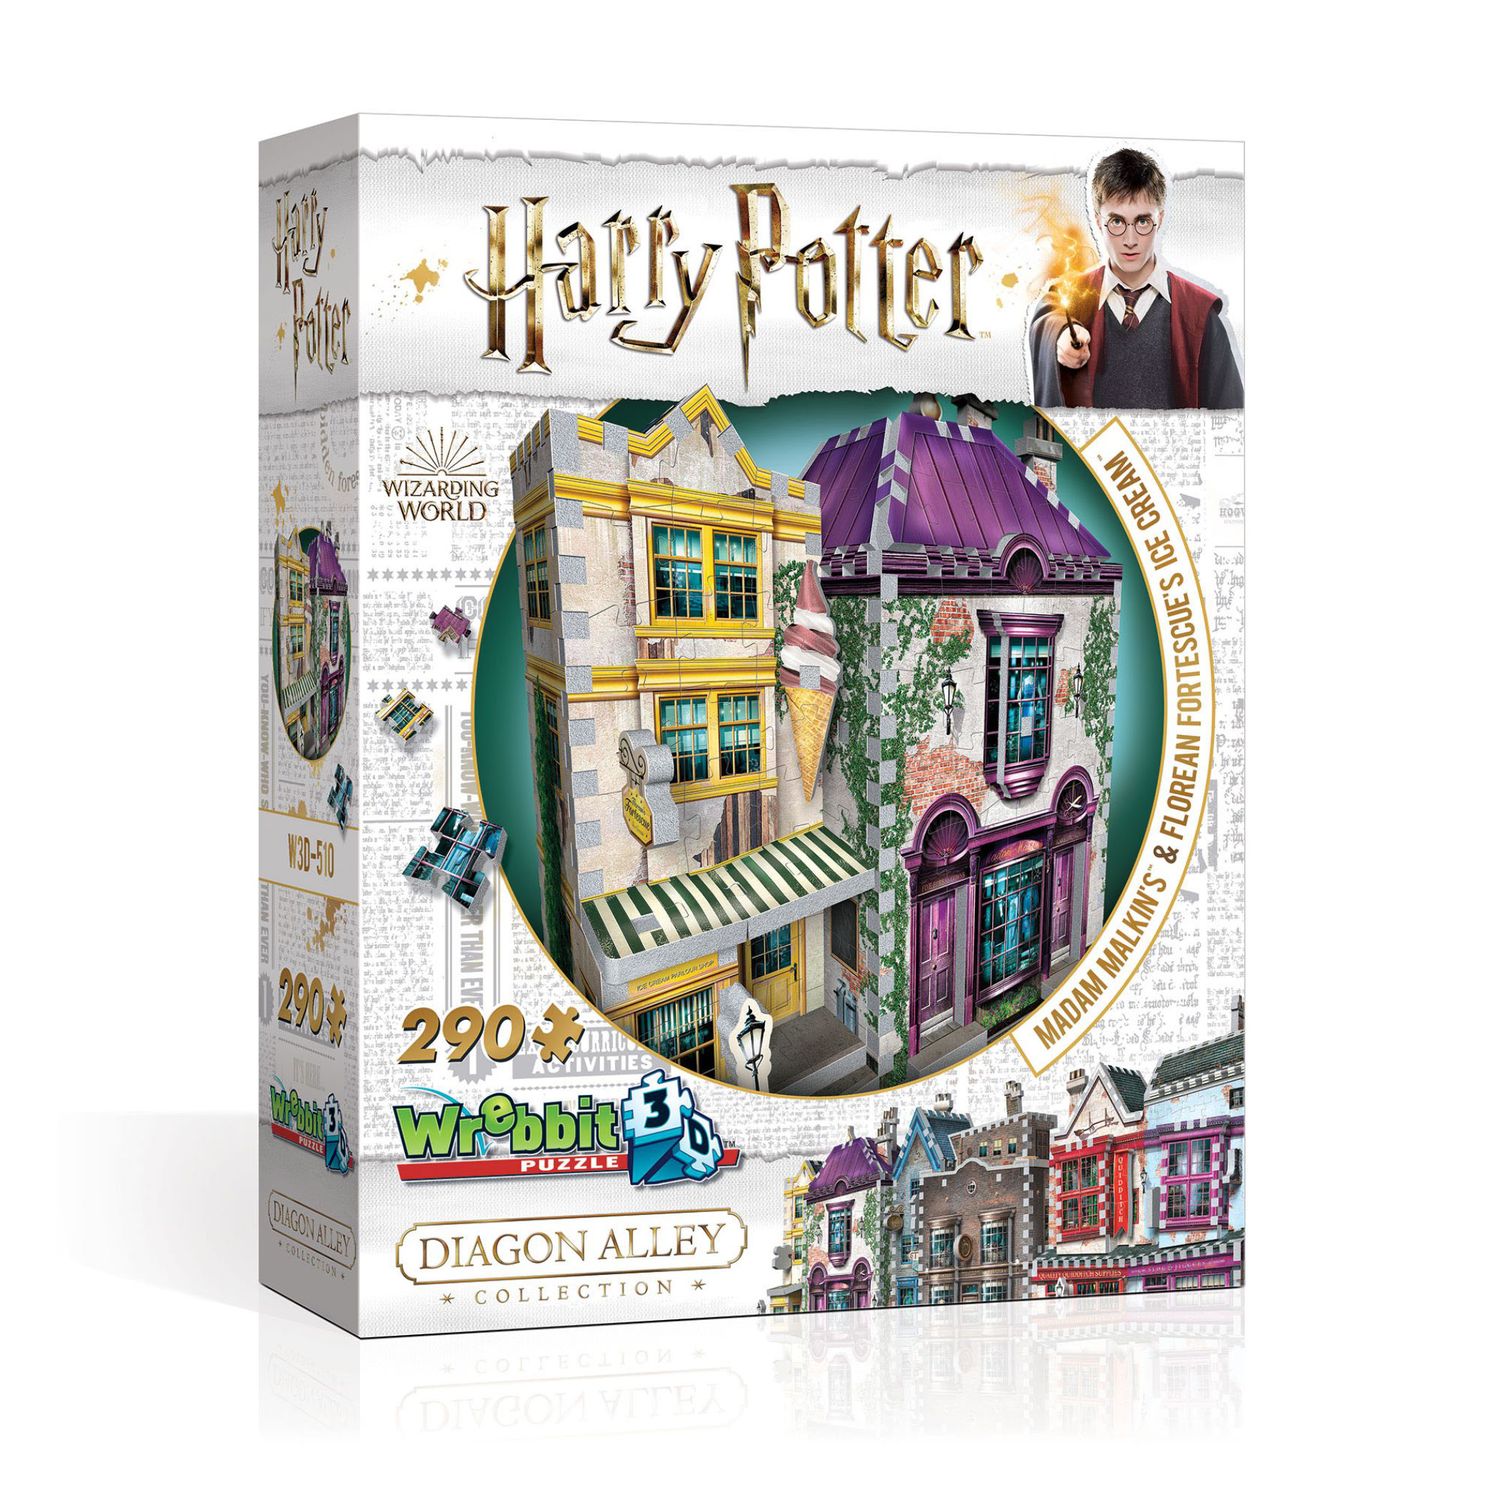 Image for Harry Potter Wrebbit3D Madam Malkin's & Florean Fortescue's Ice Cream Puzzle at Kohl's.